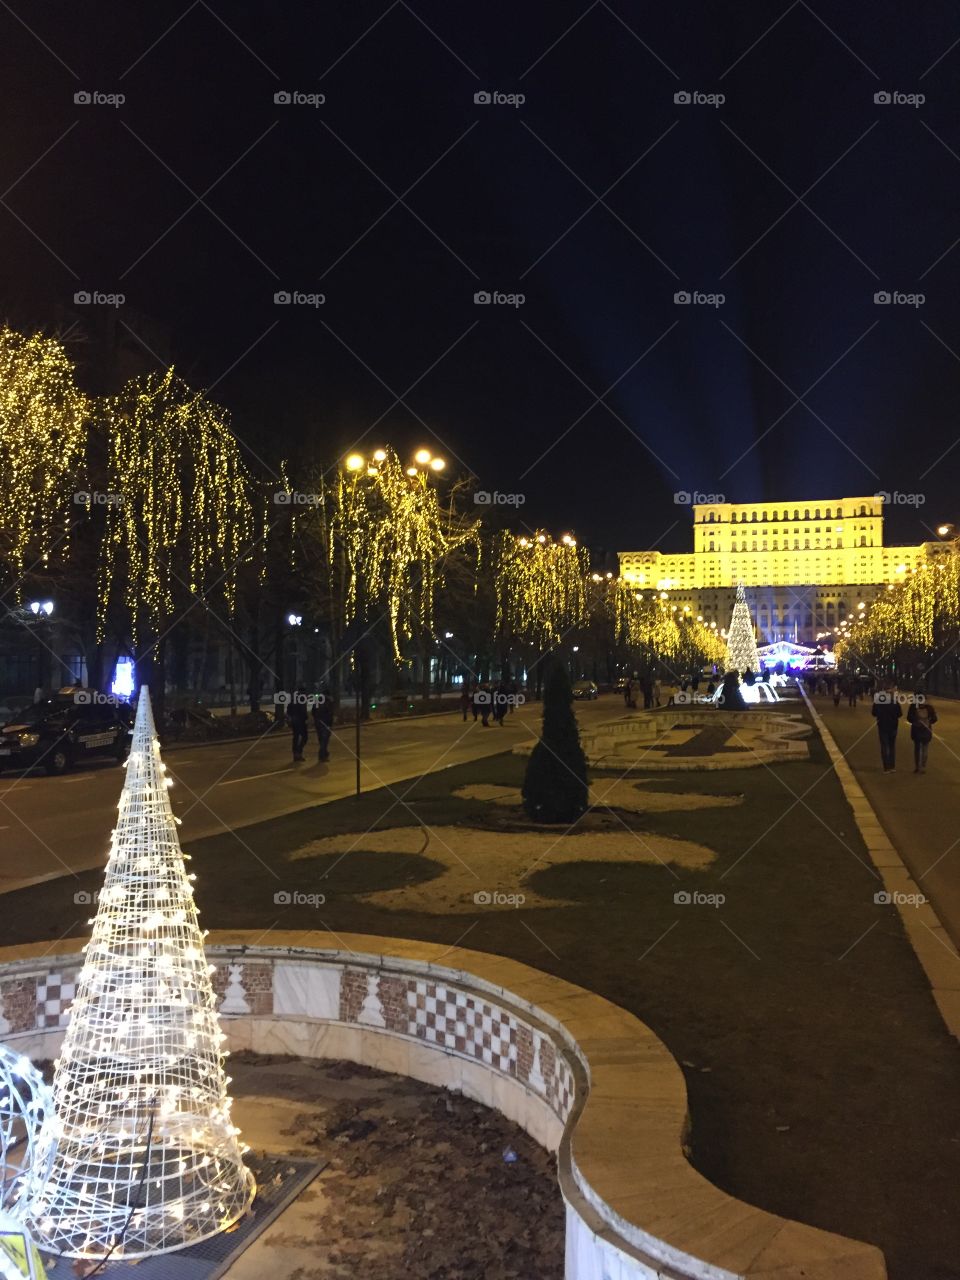 Christmas in Bucharest